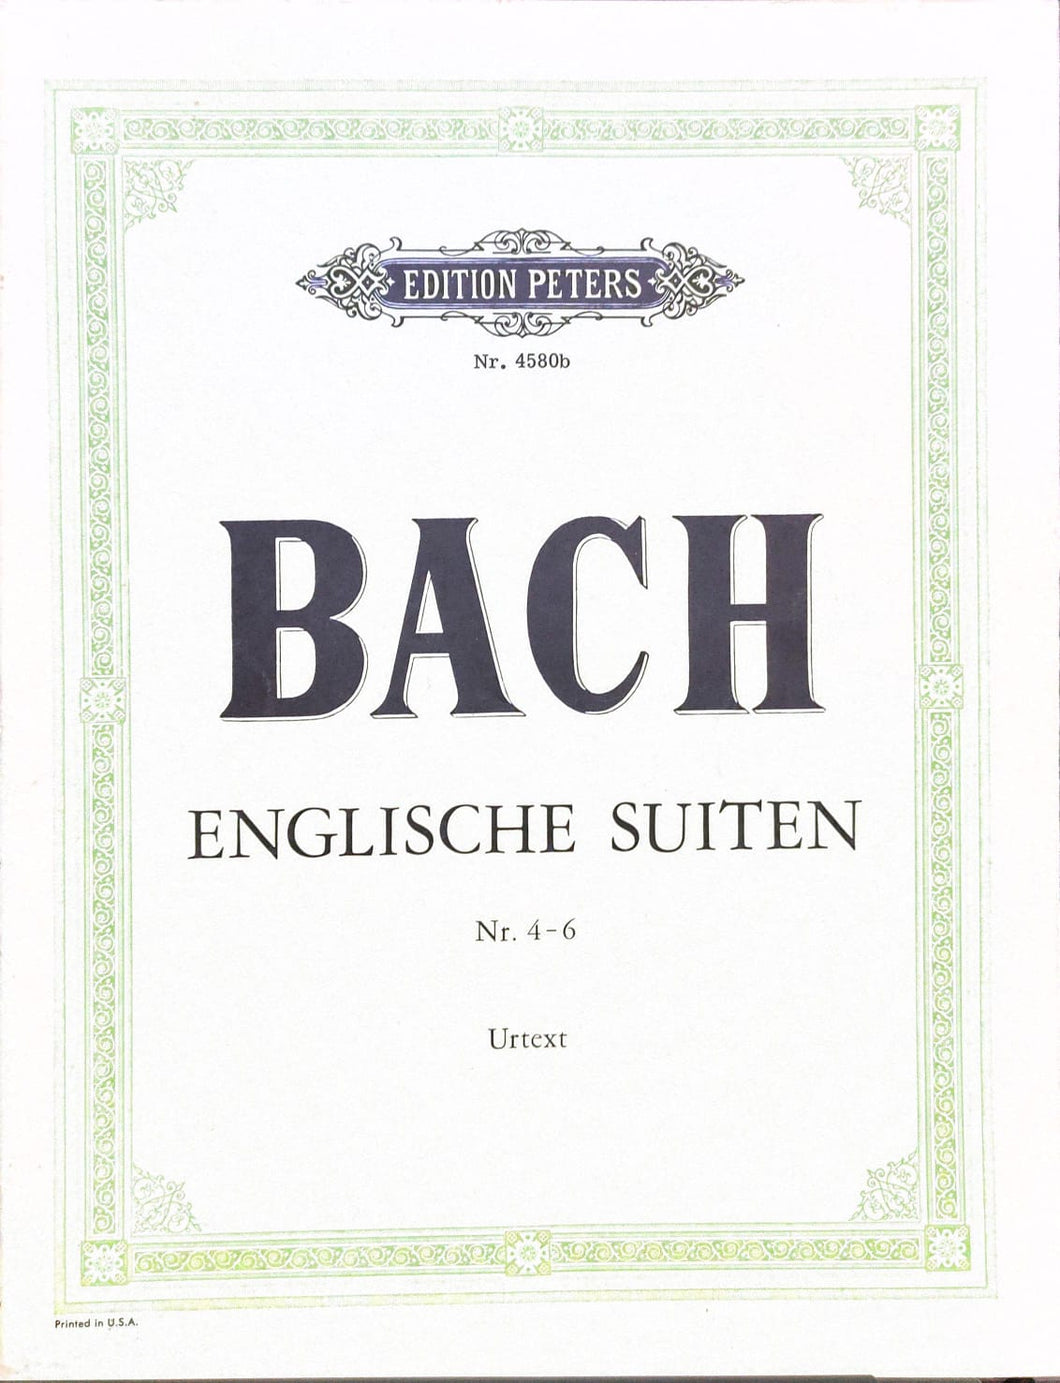 Johann Sebastian Bach: English Suite No.4-6